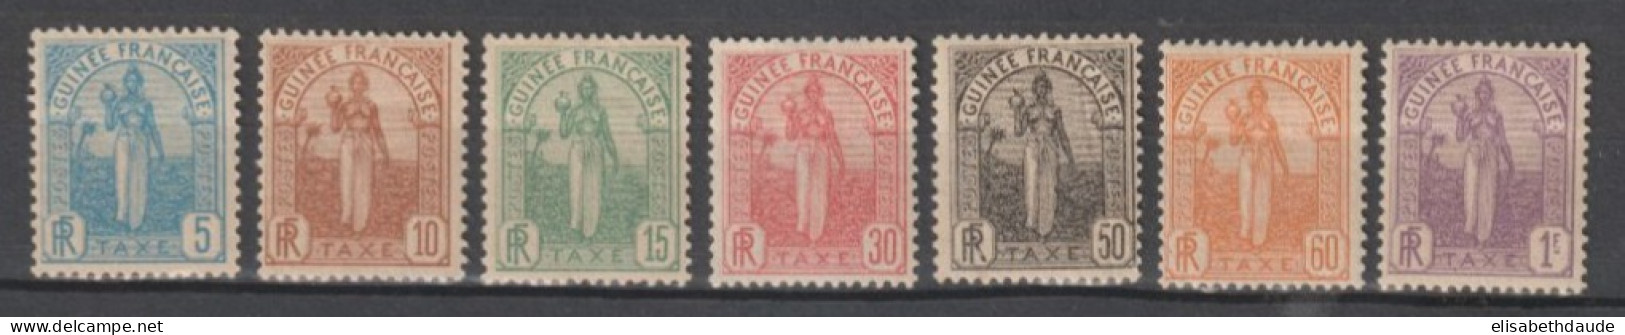 GUINEE - 1905 - SERIE TAXE COMPLETE YVERT N°1/7 * MH - COTE = 106 EUR - Ungebraucht